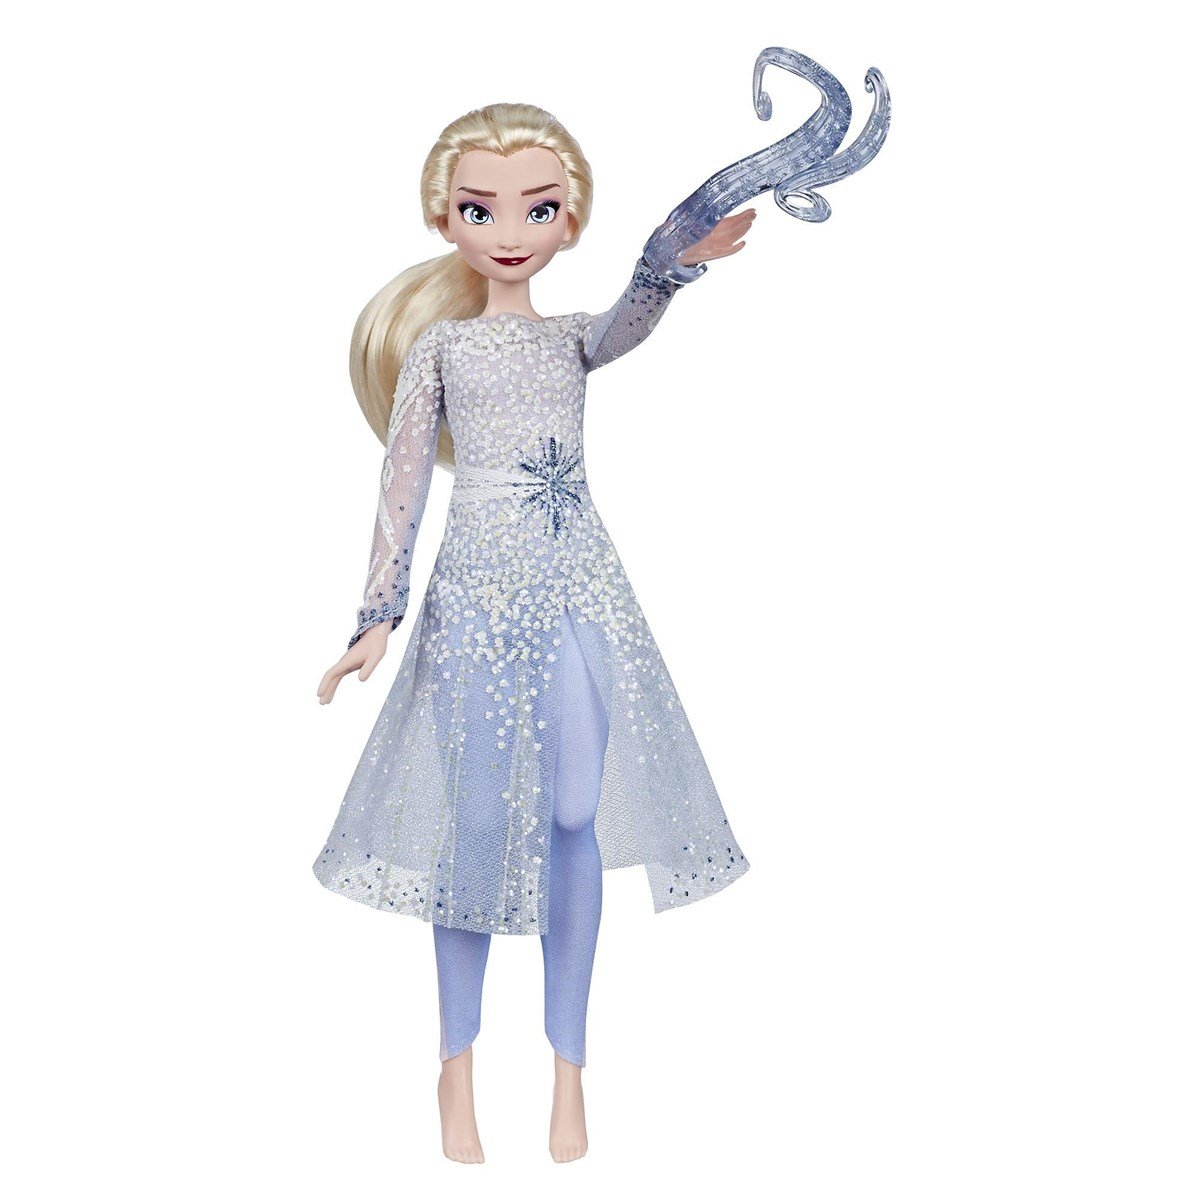 Frozen 2 Magical Discovery Elsa E8569 - Toysall